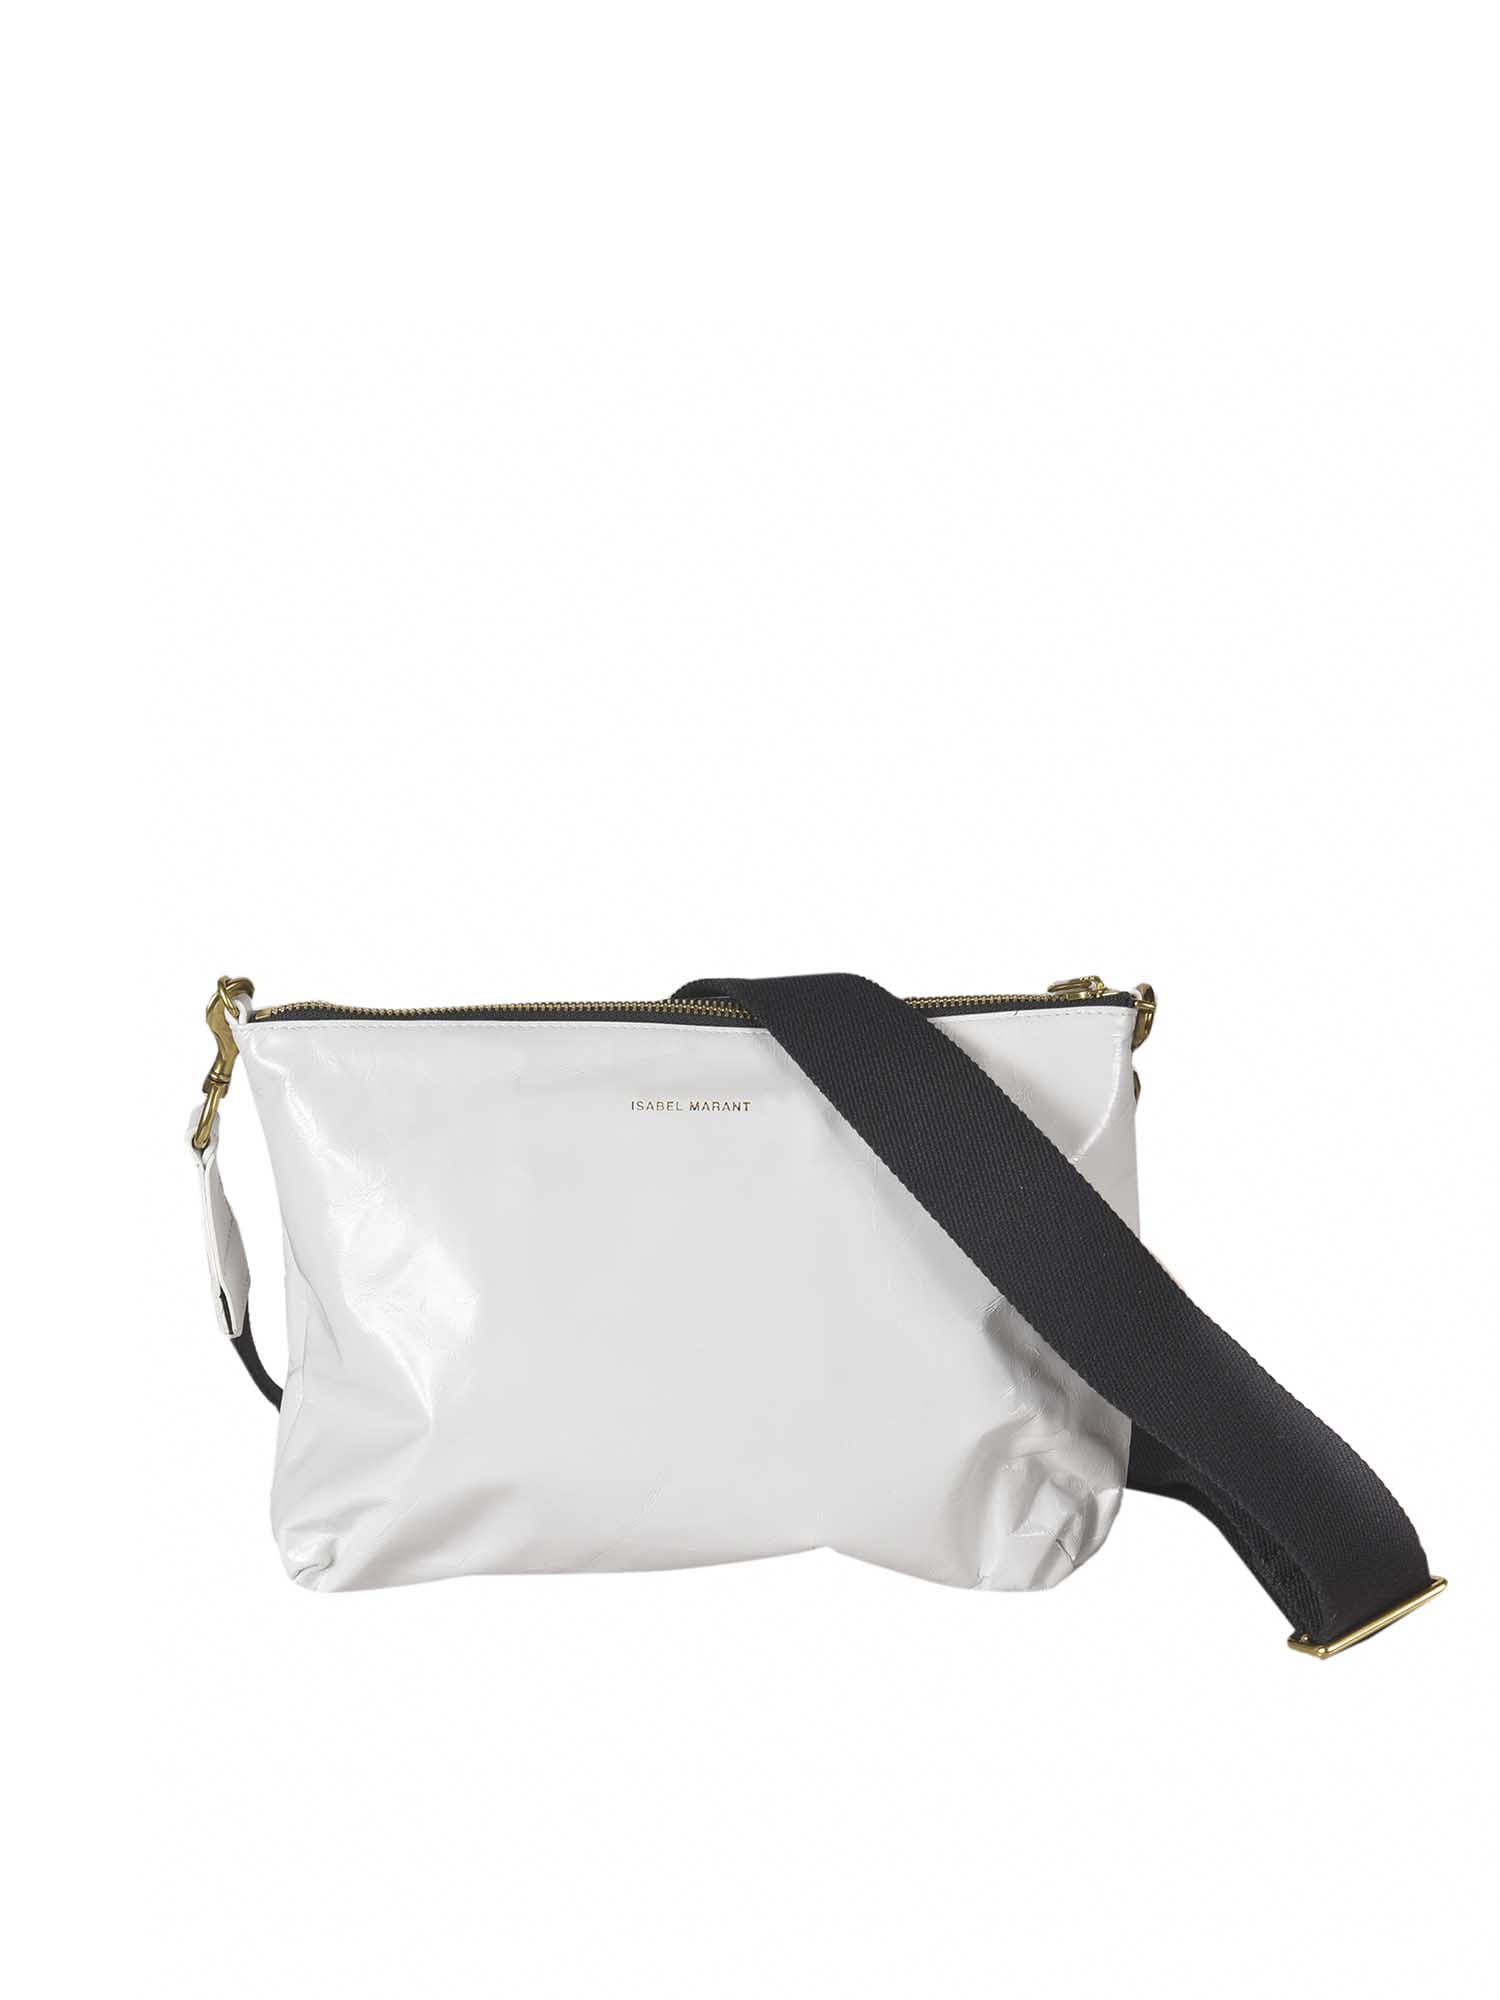 Isabel Marant Nessah New Iconic Shoulder Bag